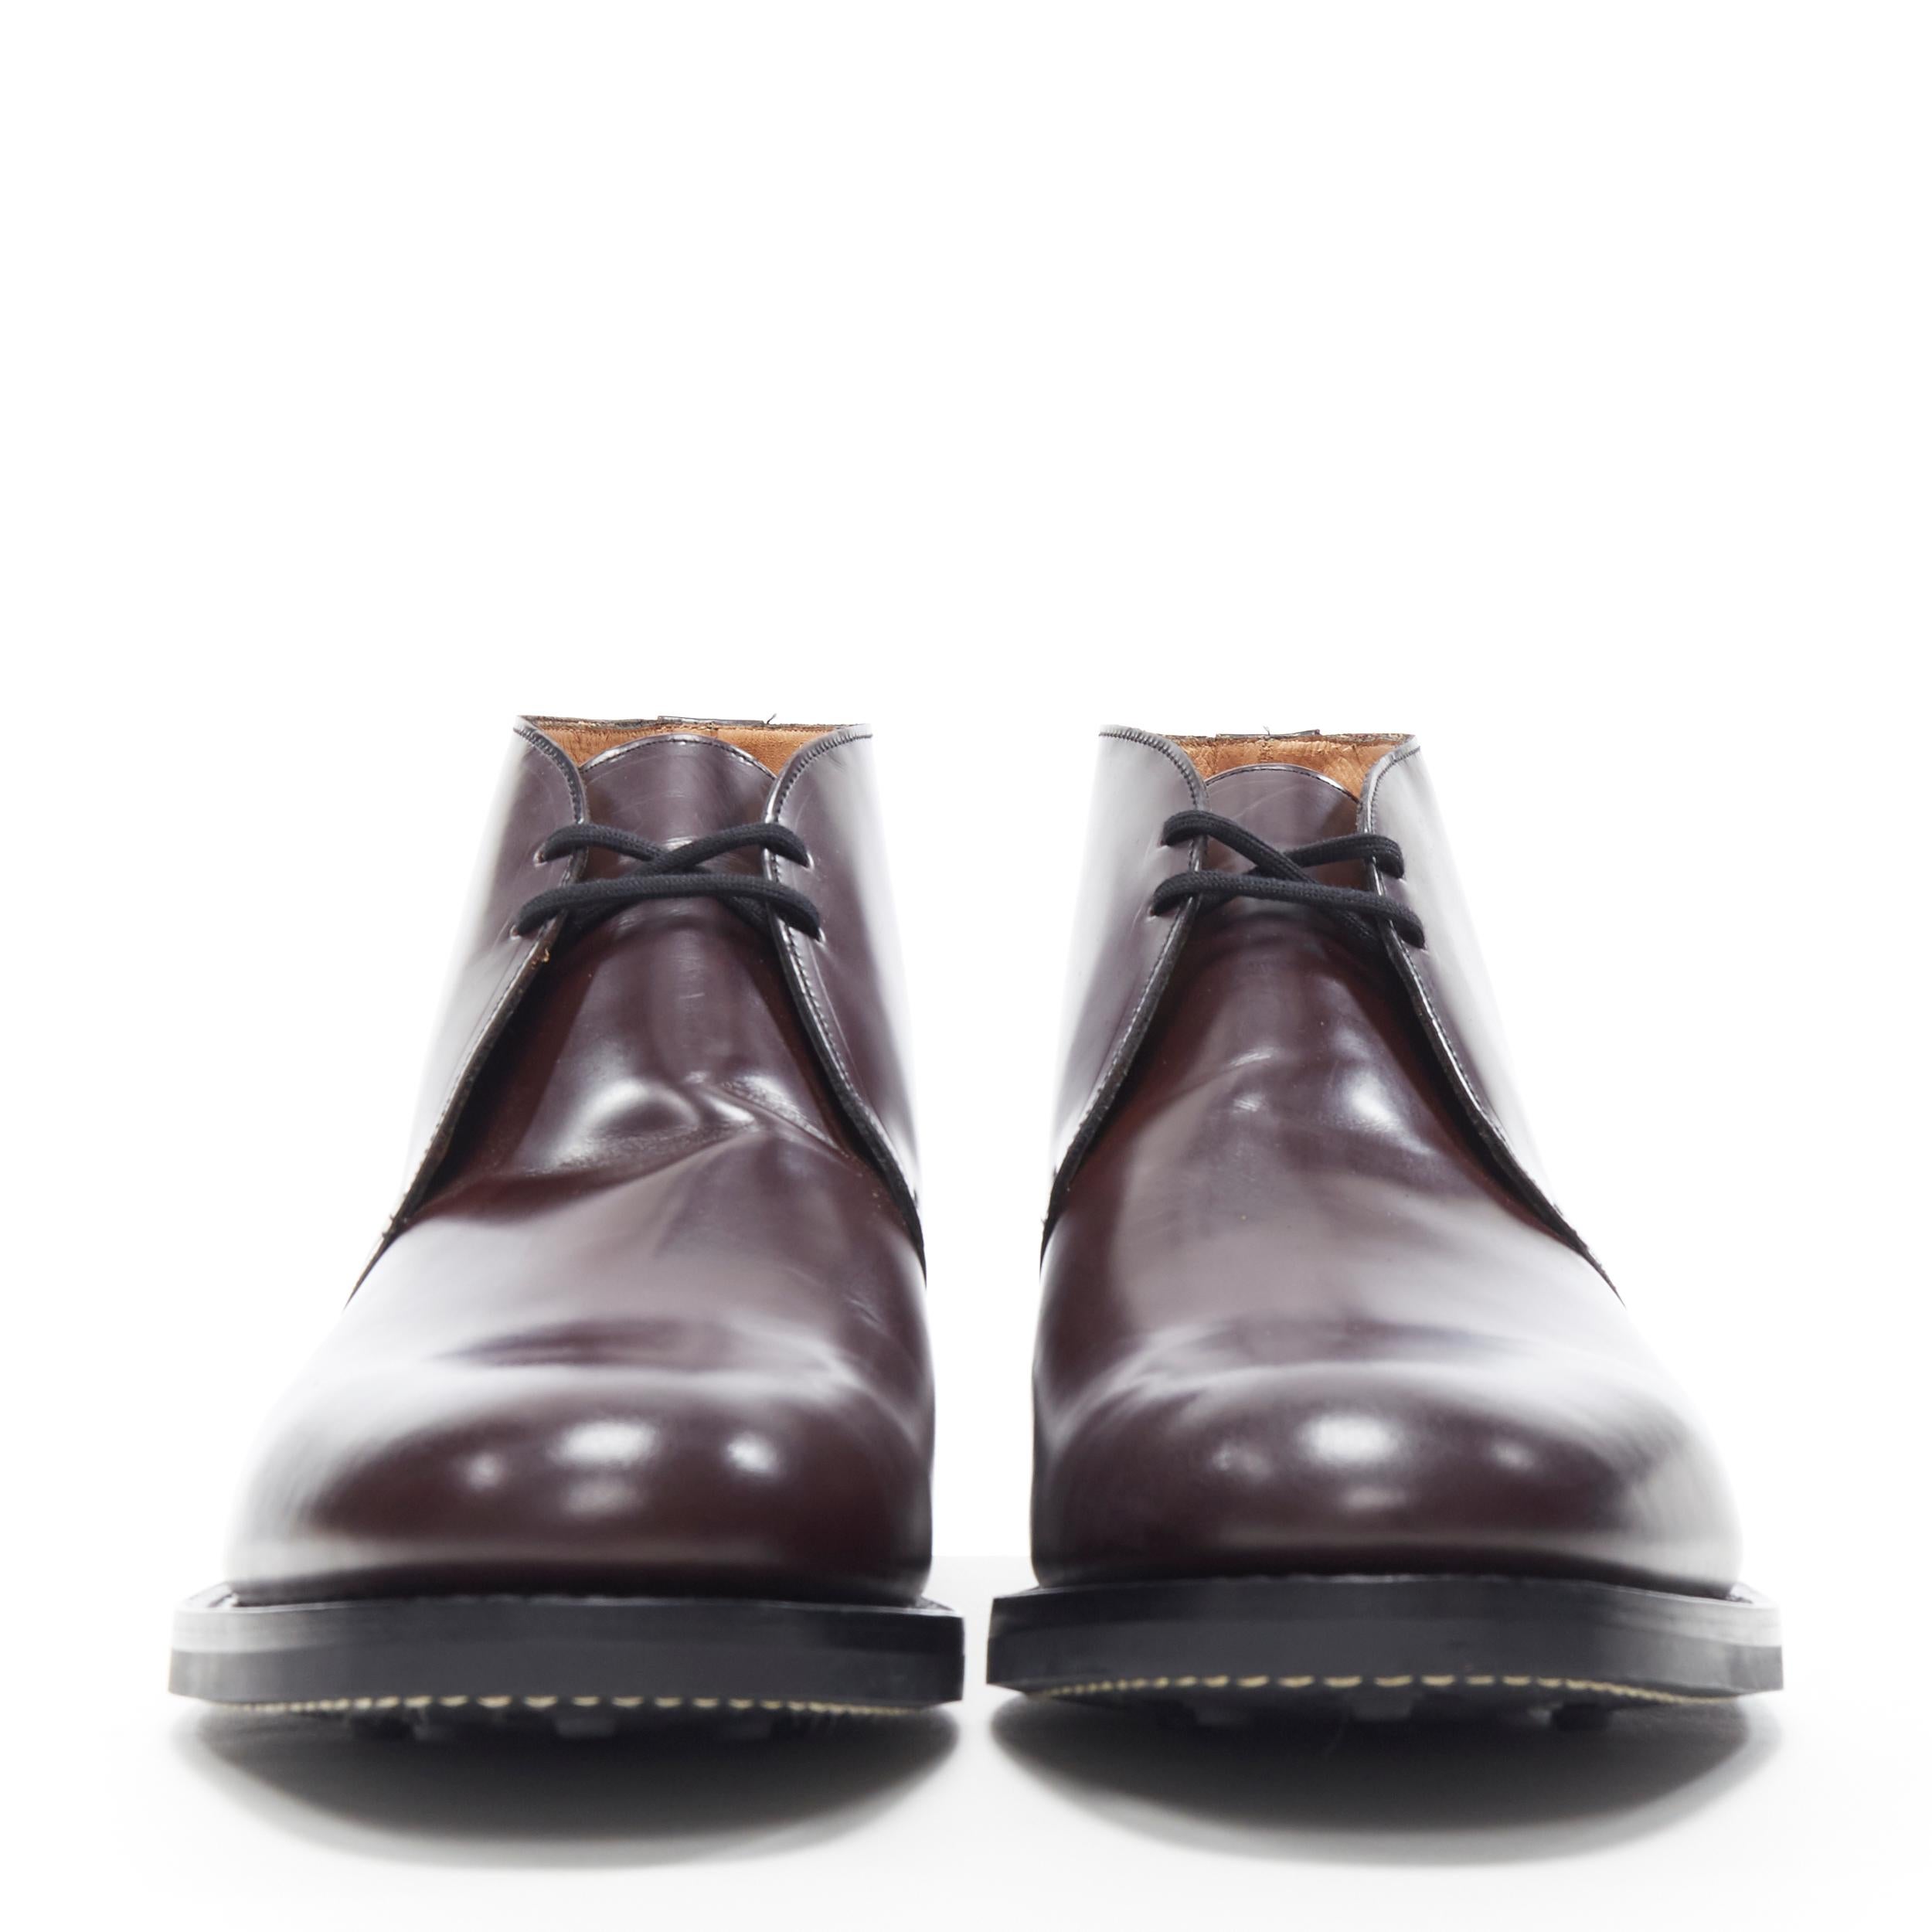 Black new CHURCHS Ryder 3 Burgundy Bright Calf polished leather chukka boots UK11 EU45